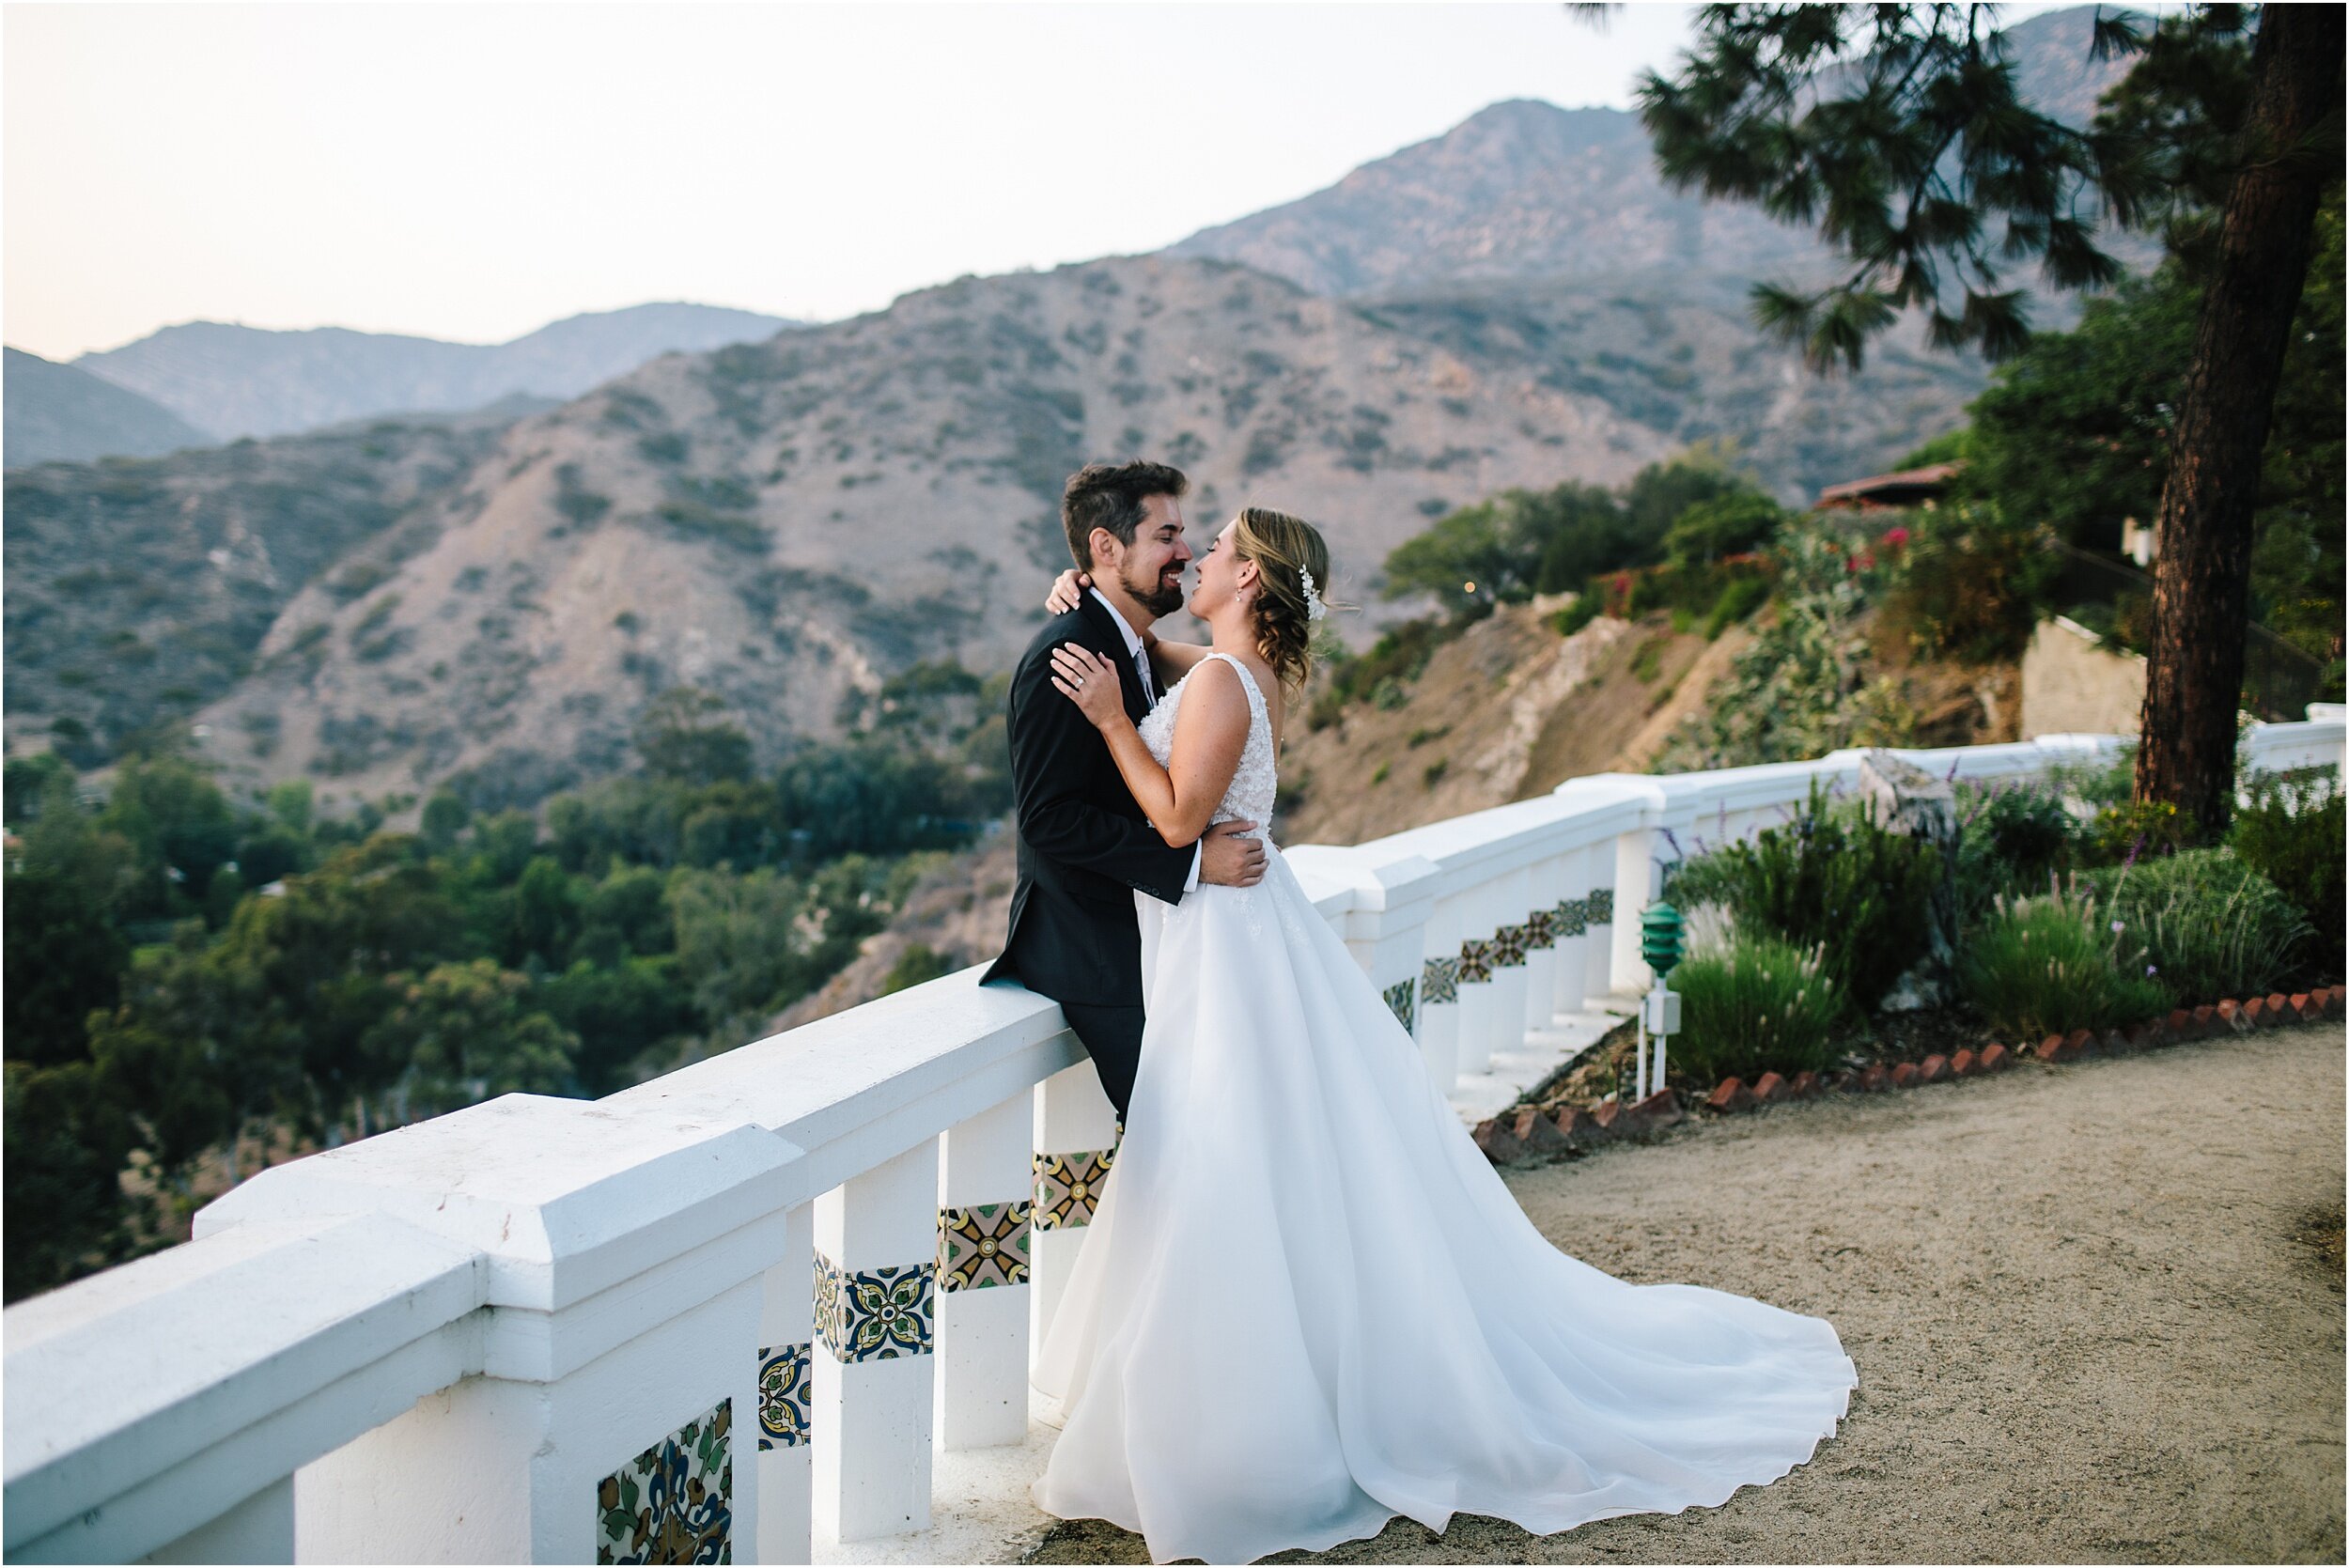 Caitlin and jason | Small Malibu Wedding | Malibu Elopement Photographer_0057.jpg